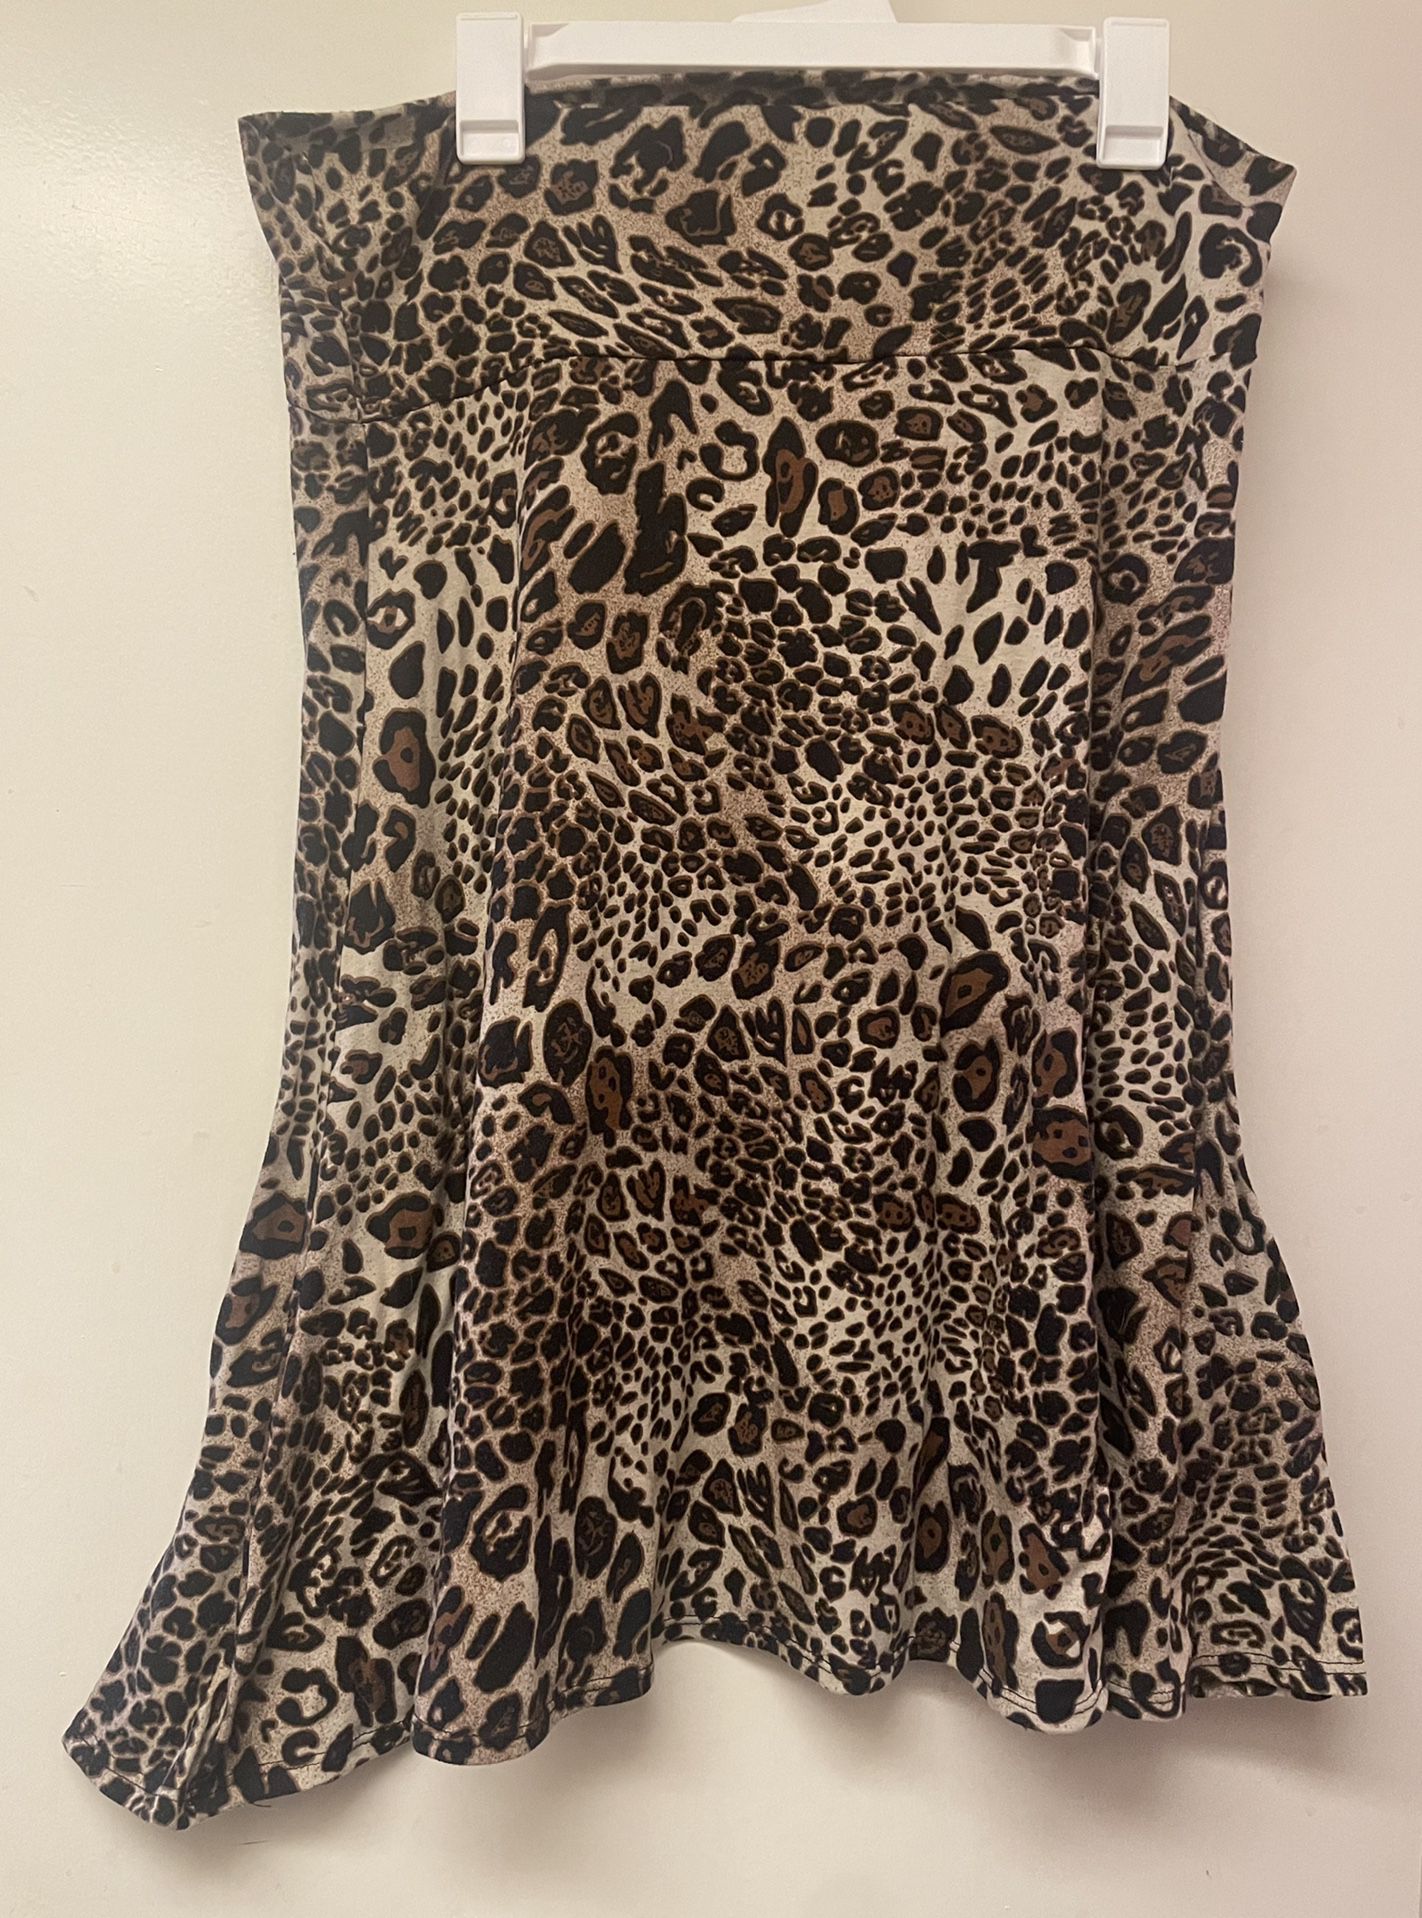 XL LLR Leopard Print Stretchy Skater Skirt 